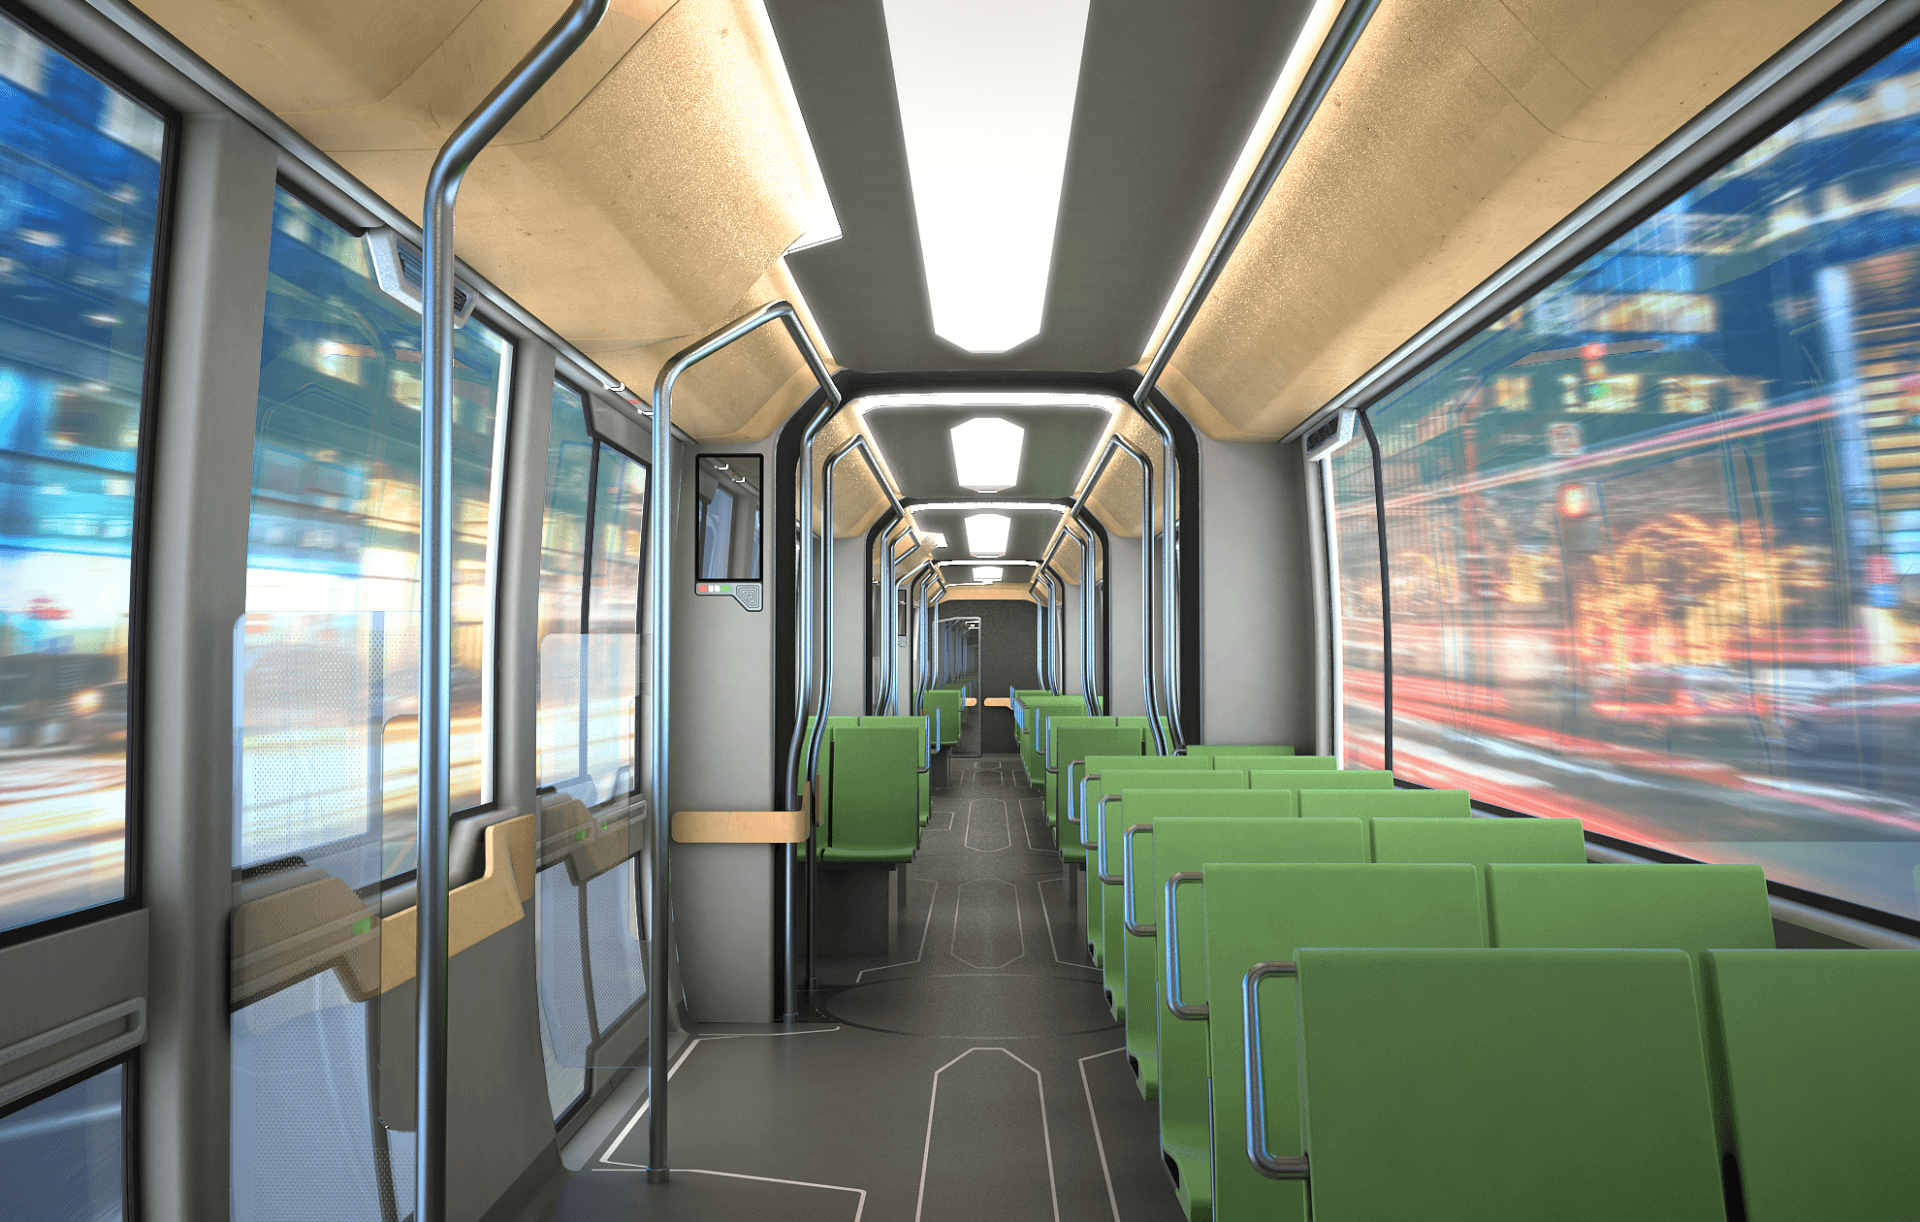 Industrial Design, Transportation Design, interior rendering of a modern tram system, green seats, wooden ceiling